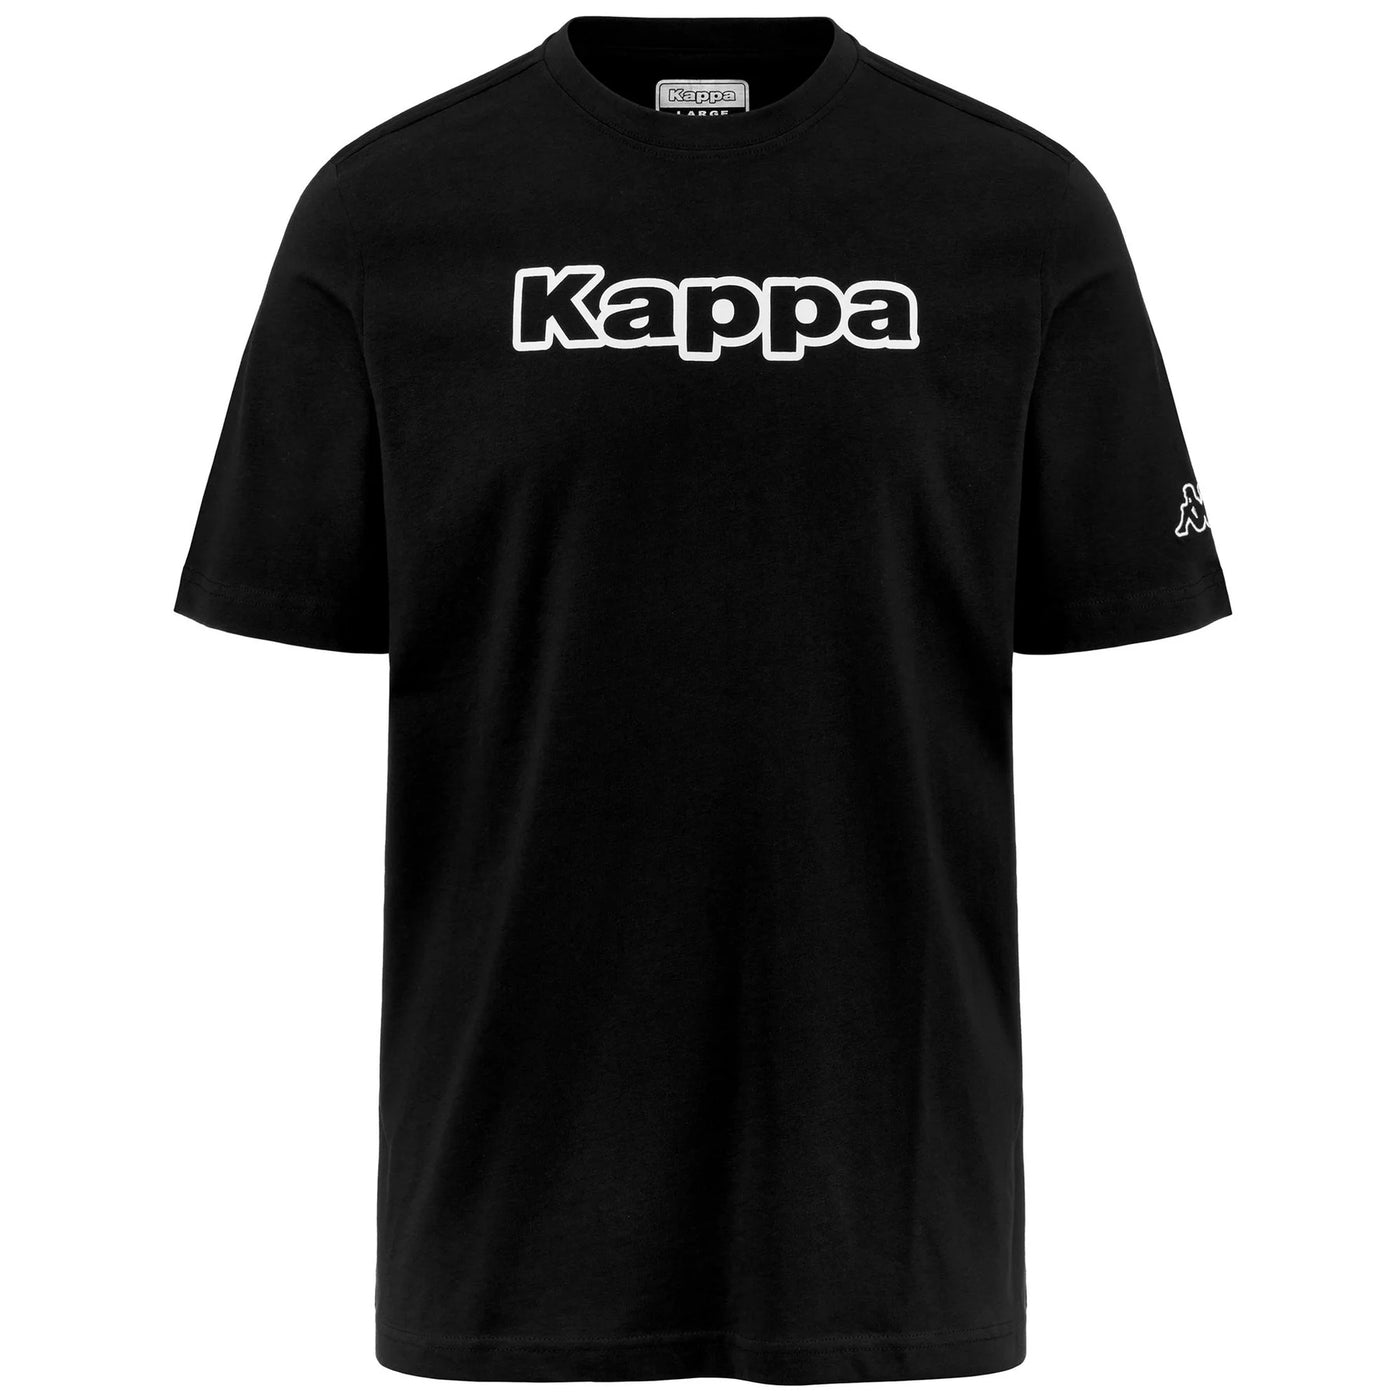 303HZ60-005 - T-Shirt - Kappa